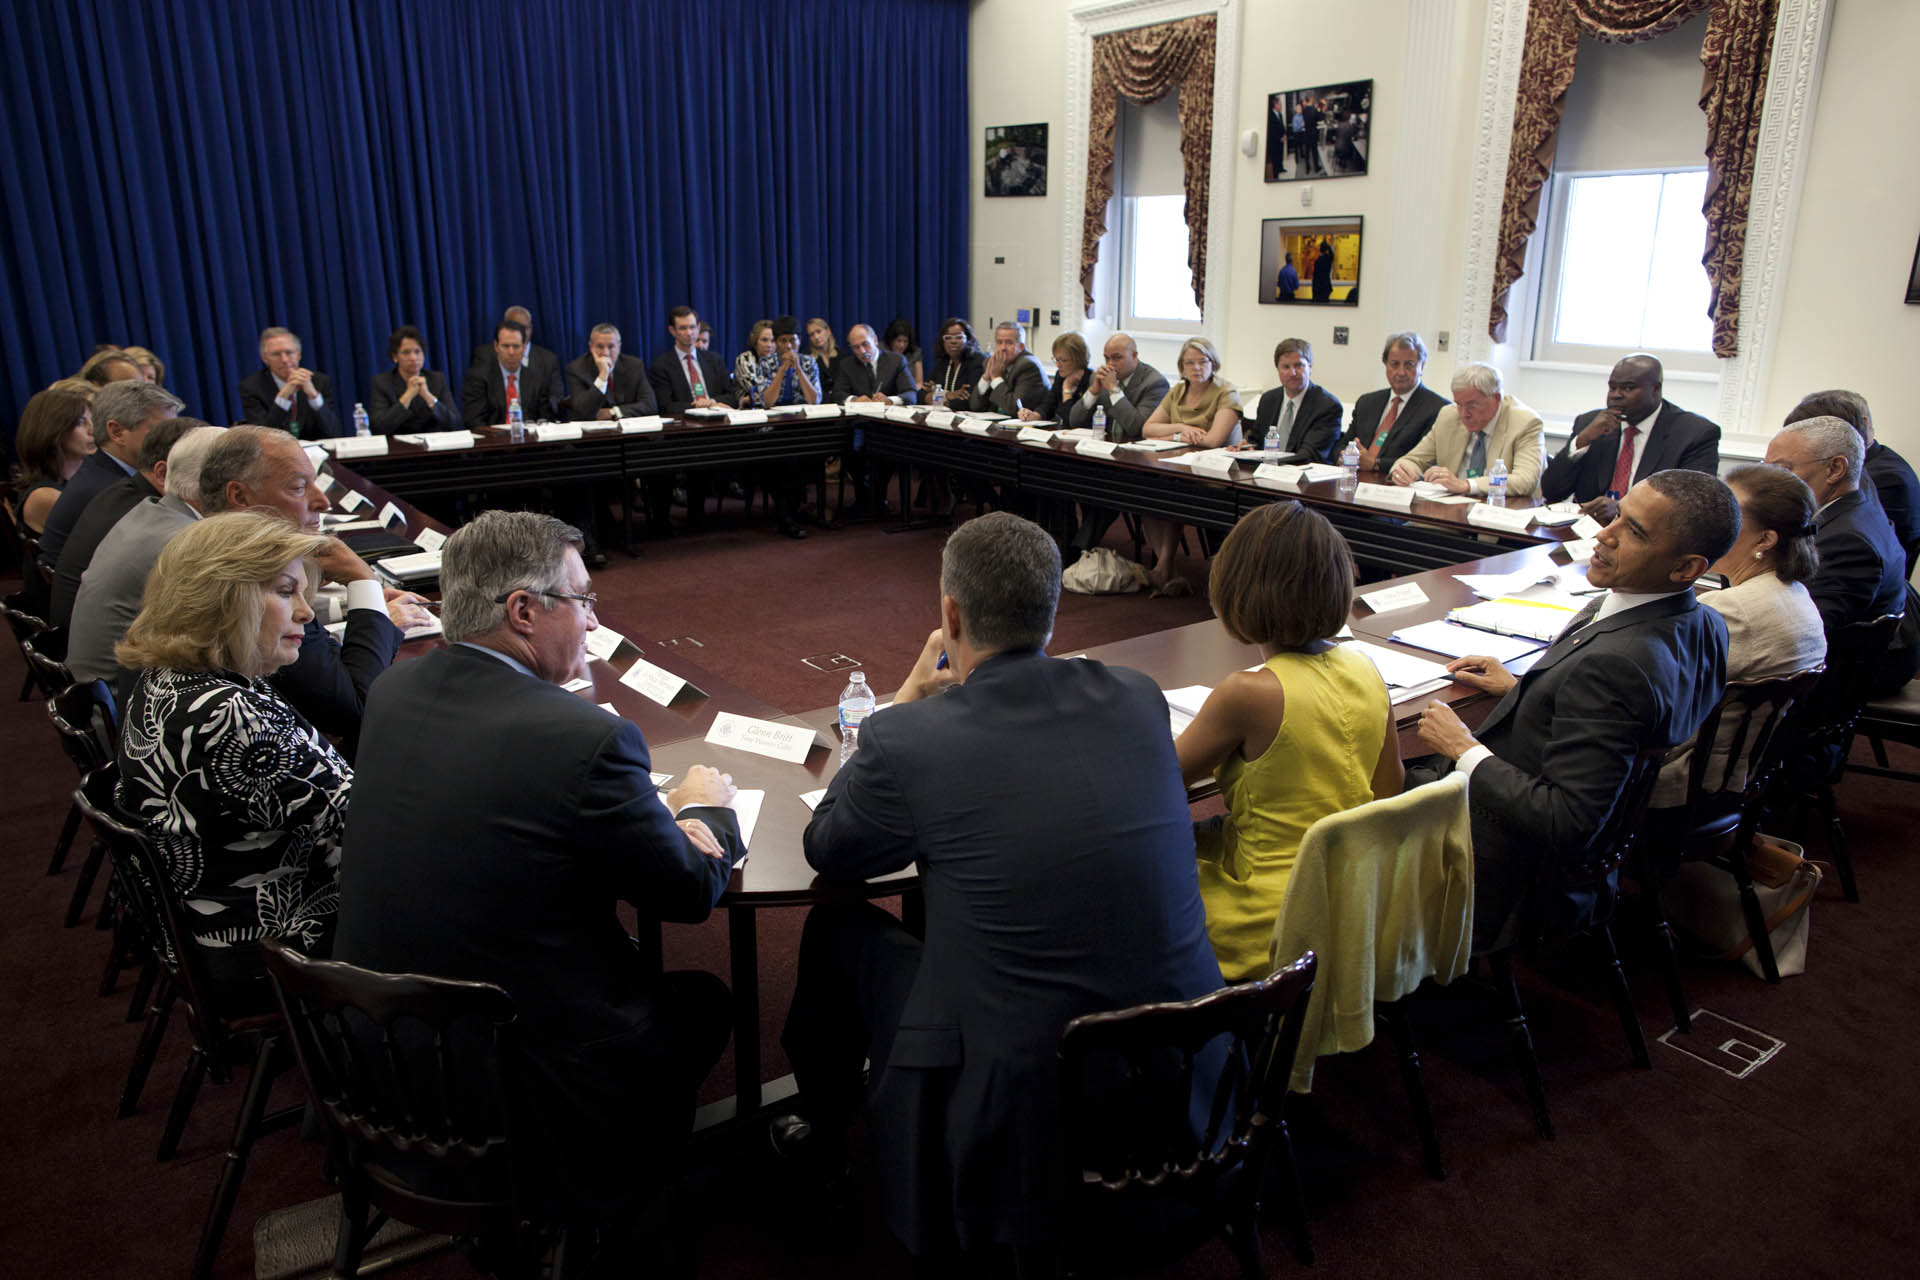 President Barack Obama Hosts an Education Roundtable